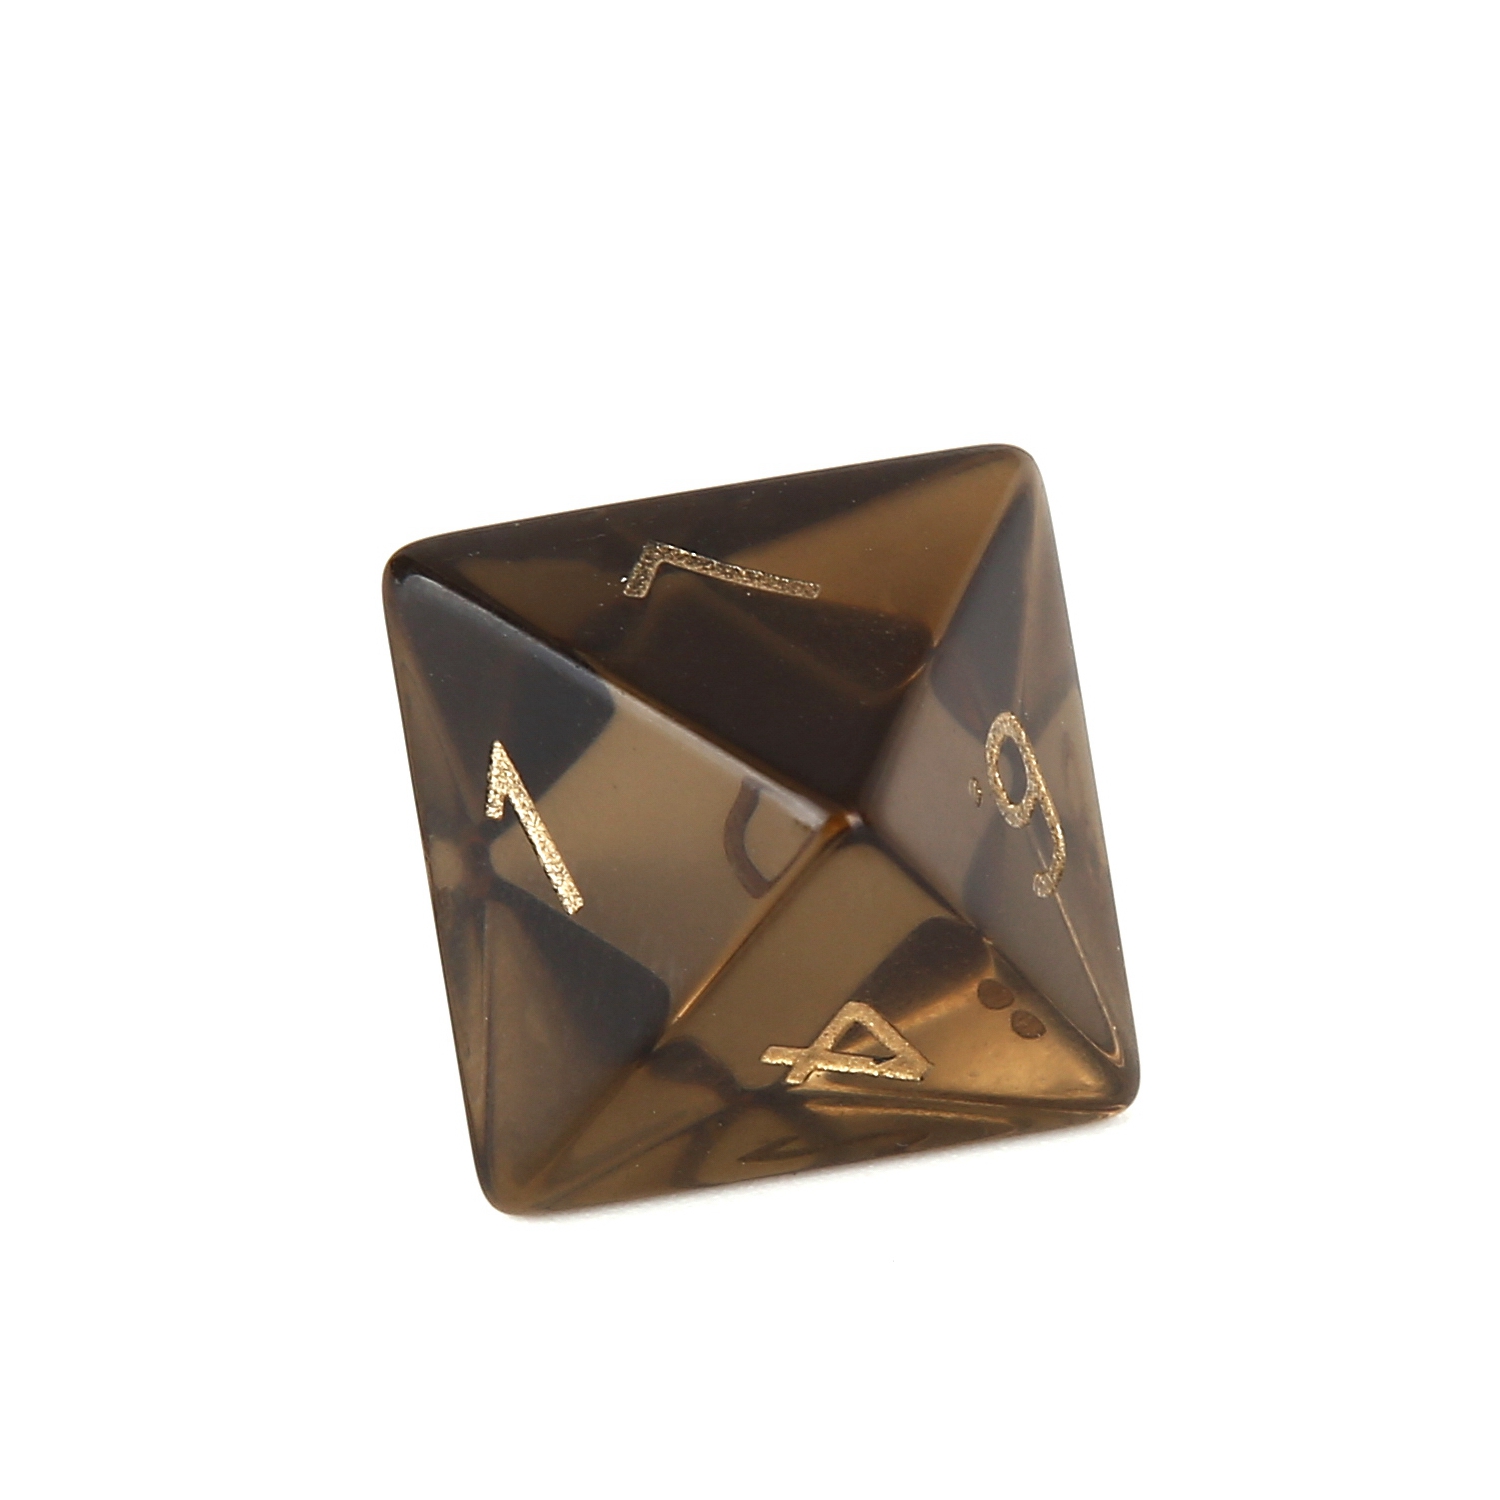 3:D8 icosahedron